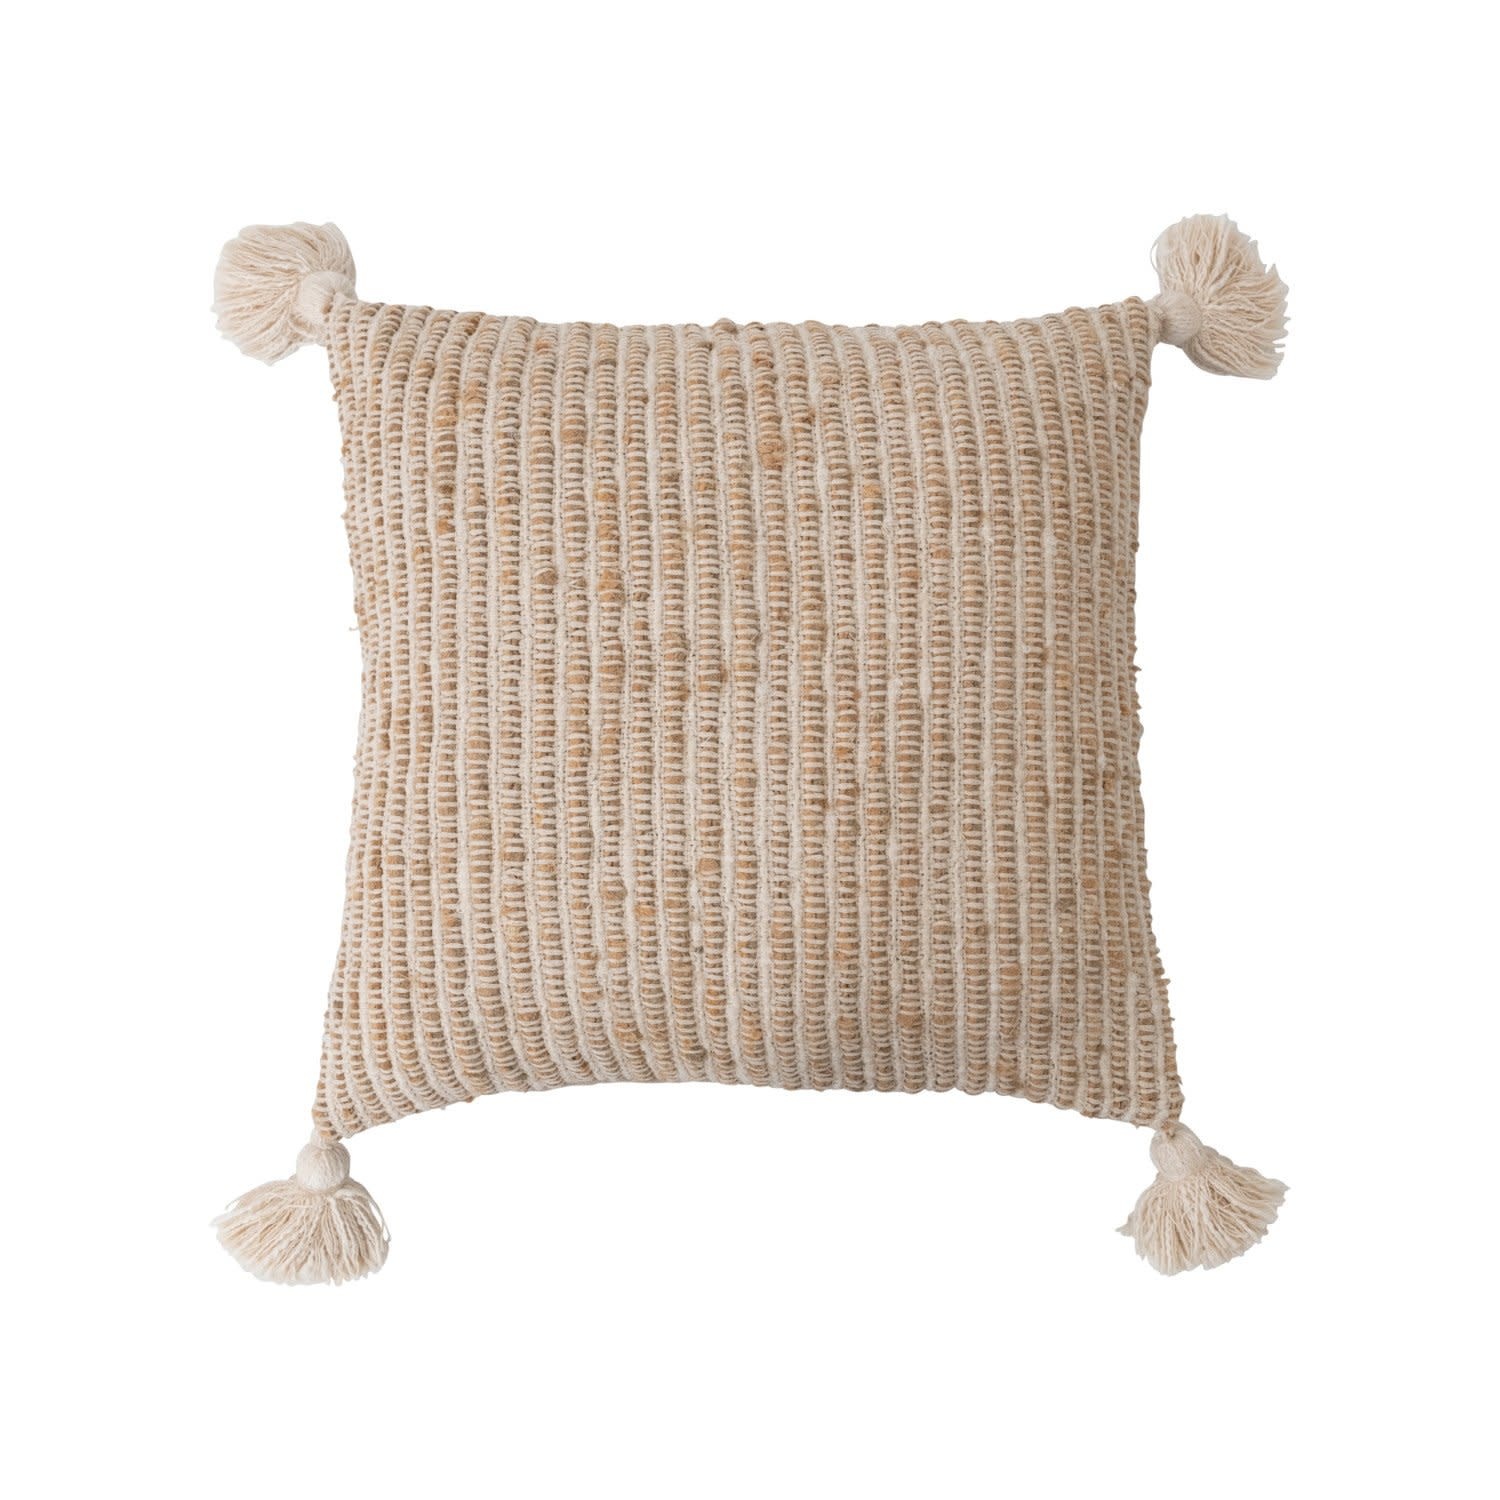 Square Woven Cotton Striped Pillow w/ Tassels, Cream & Natural, 20"